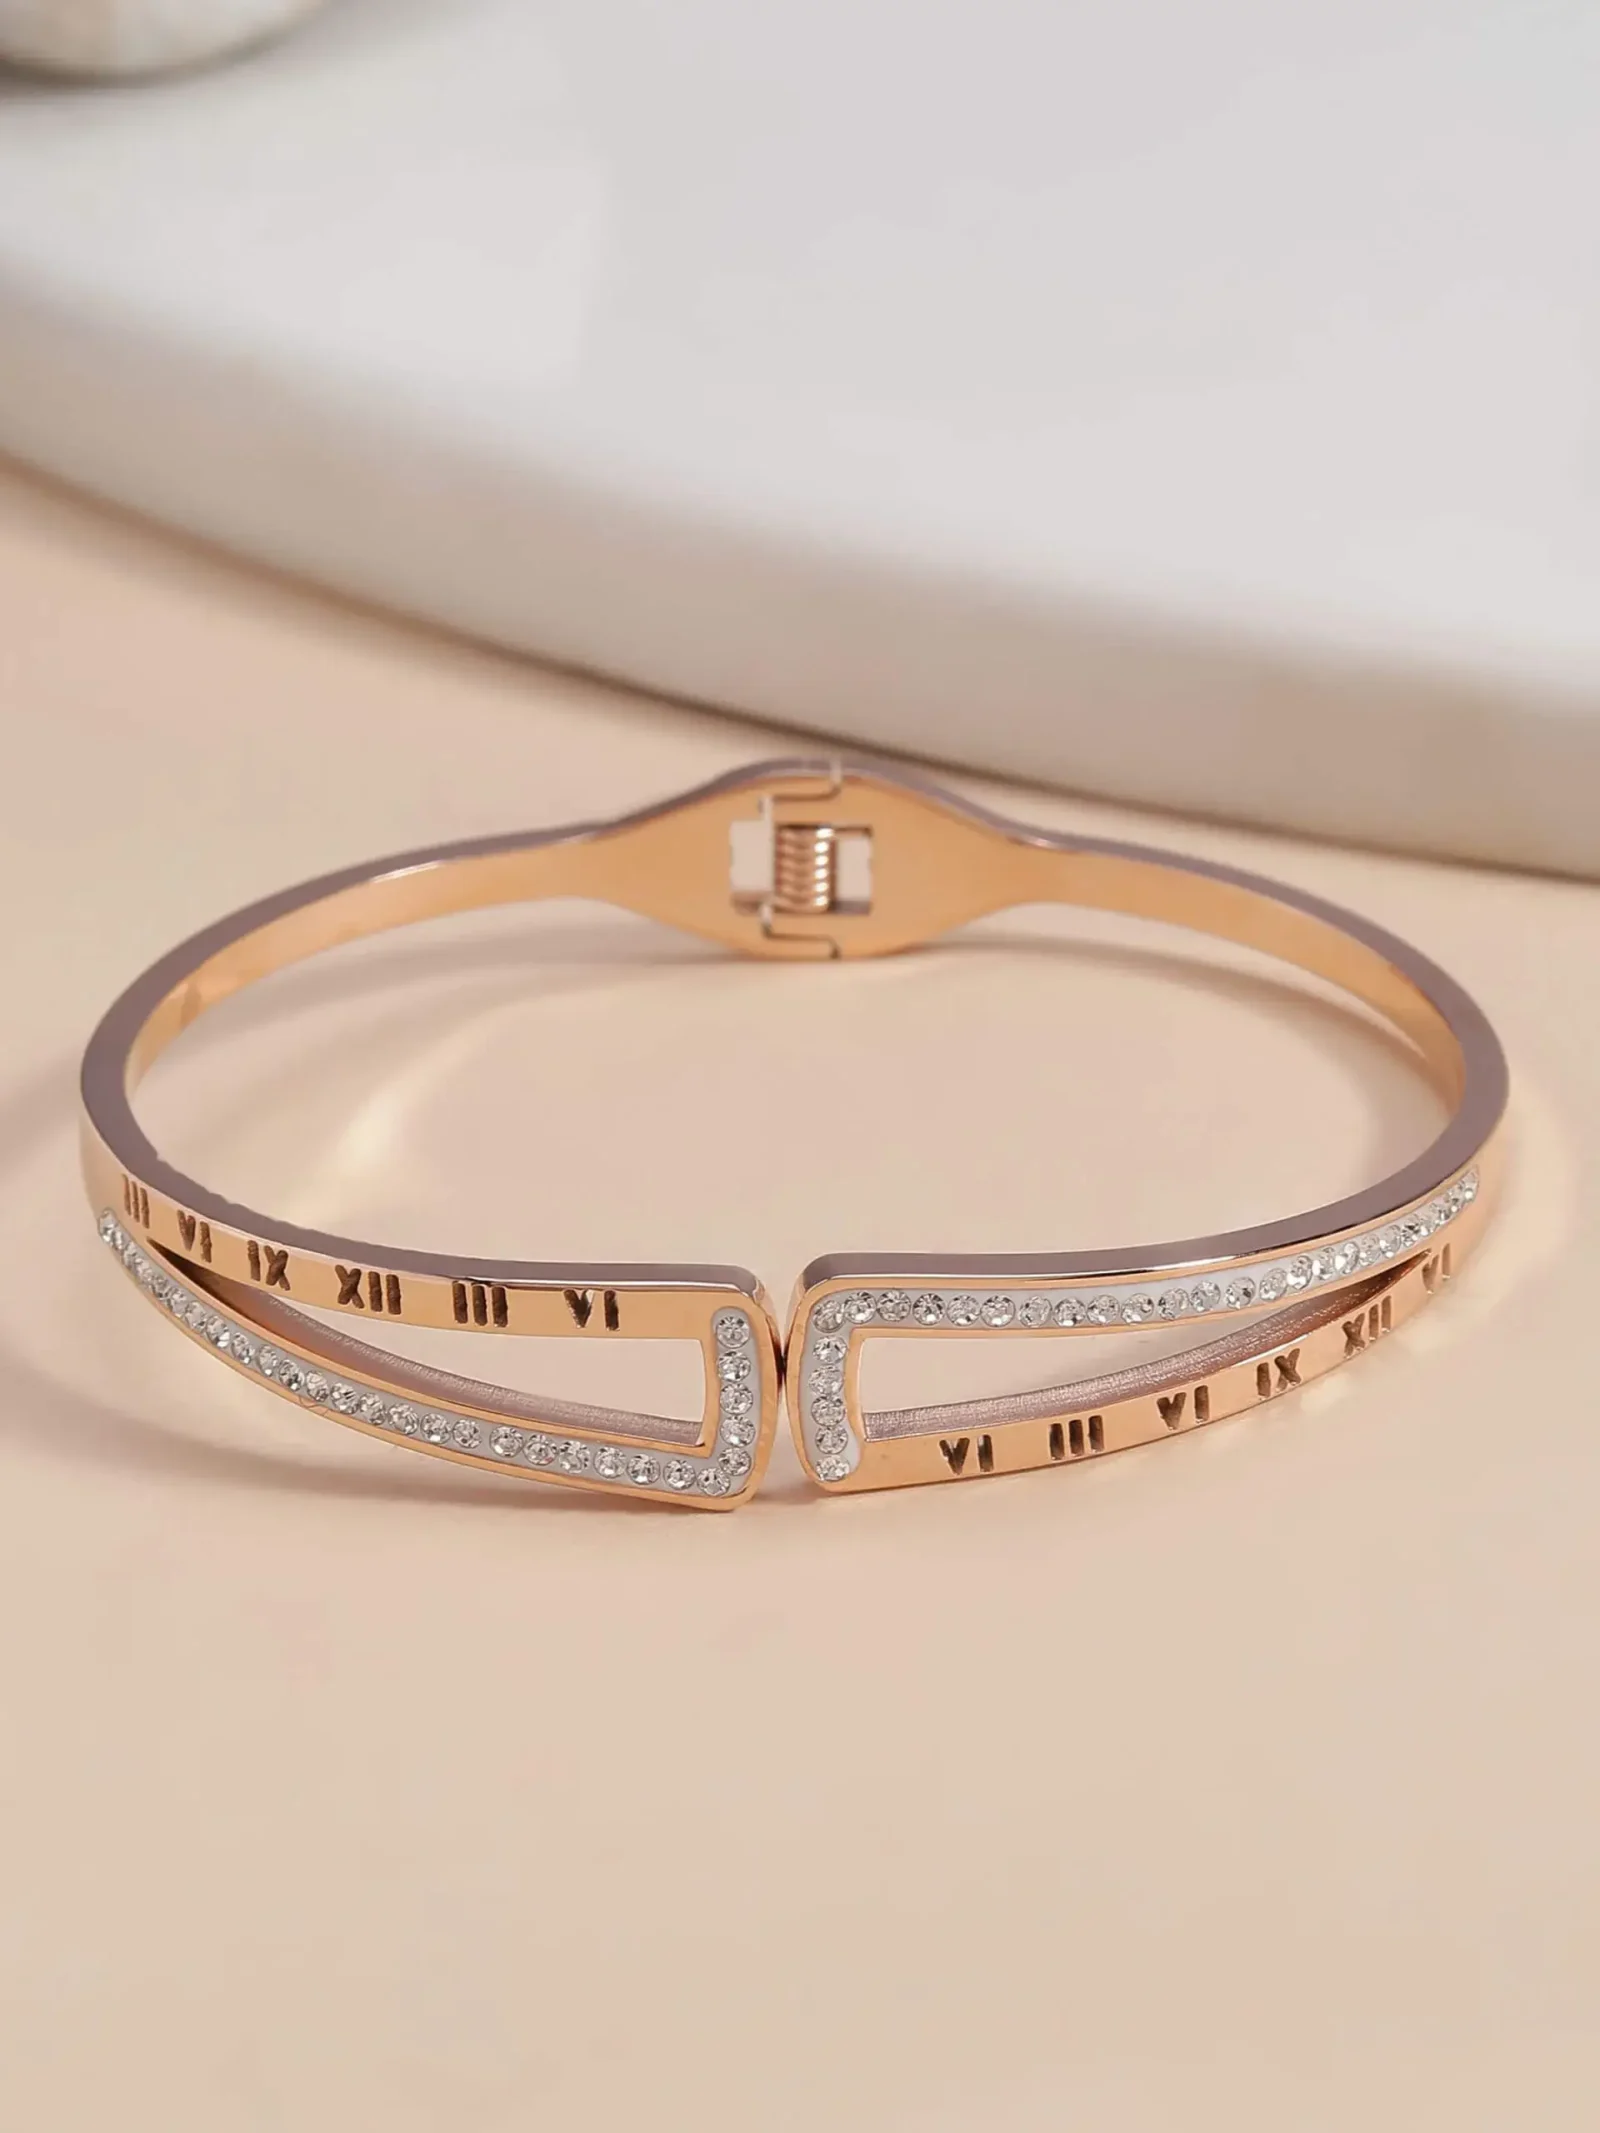 Alif Roman numeral Bracelet